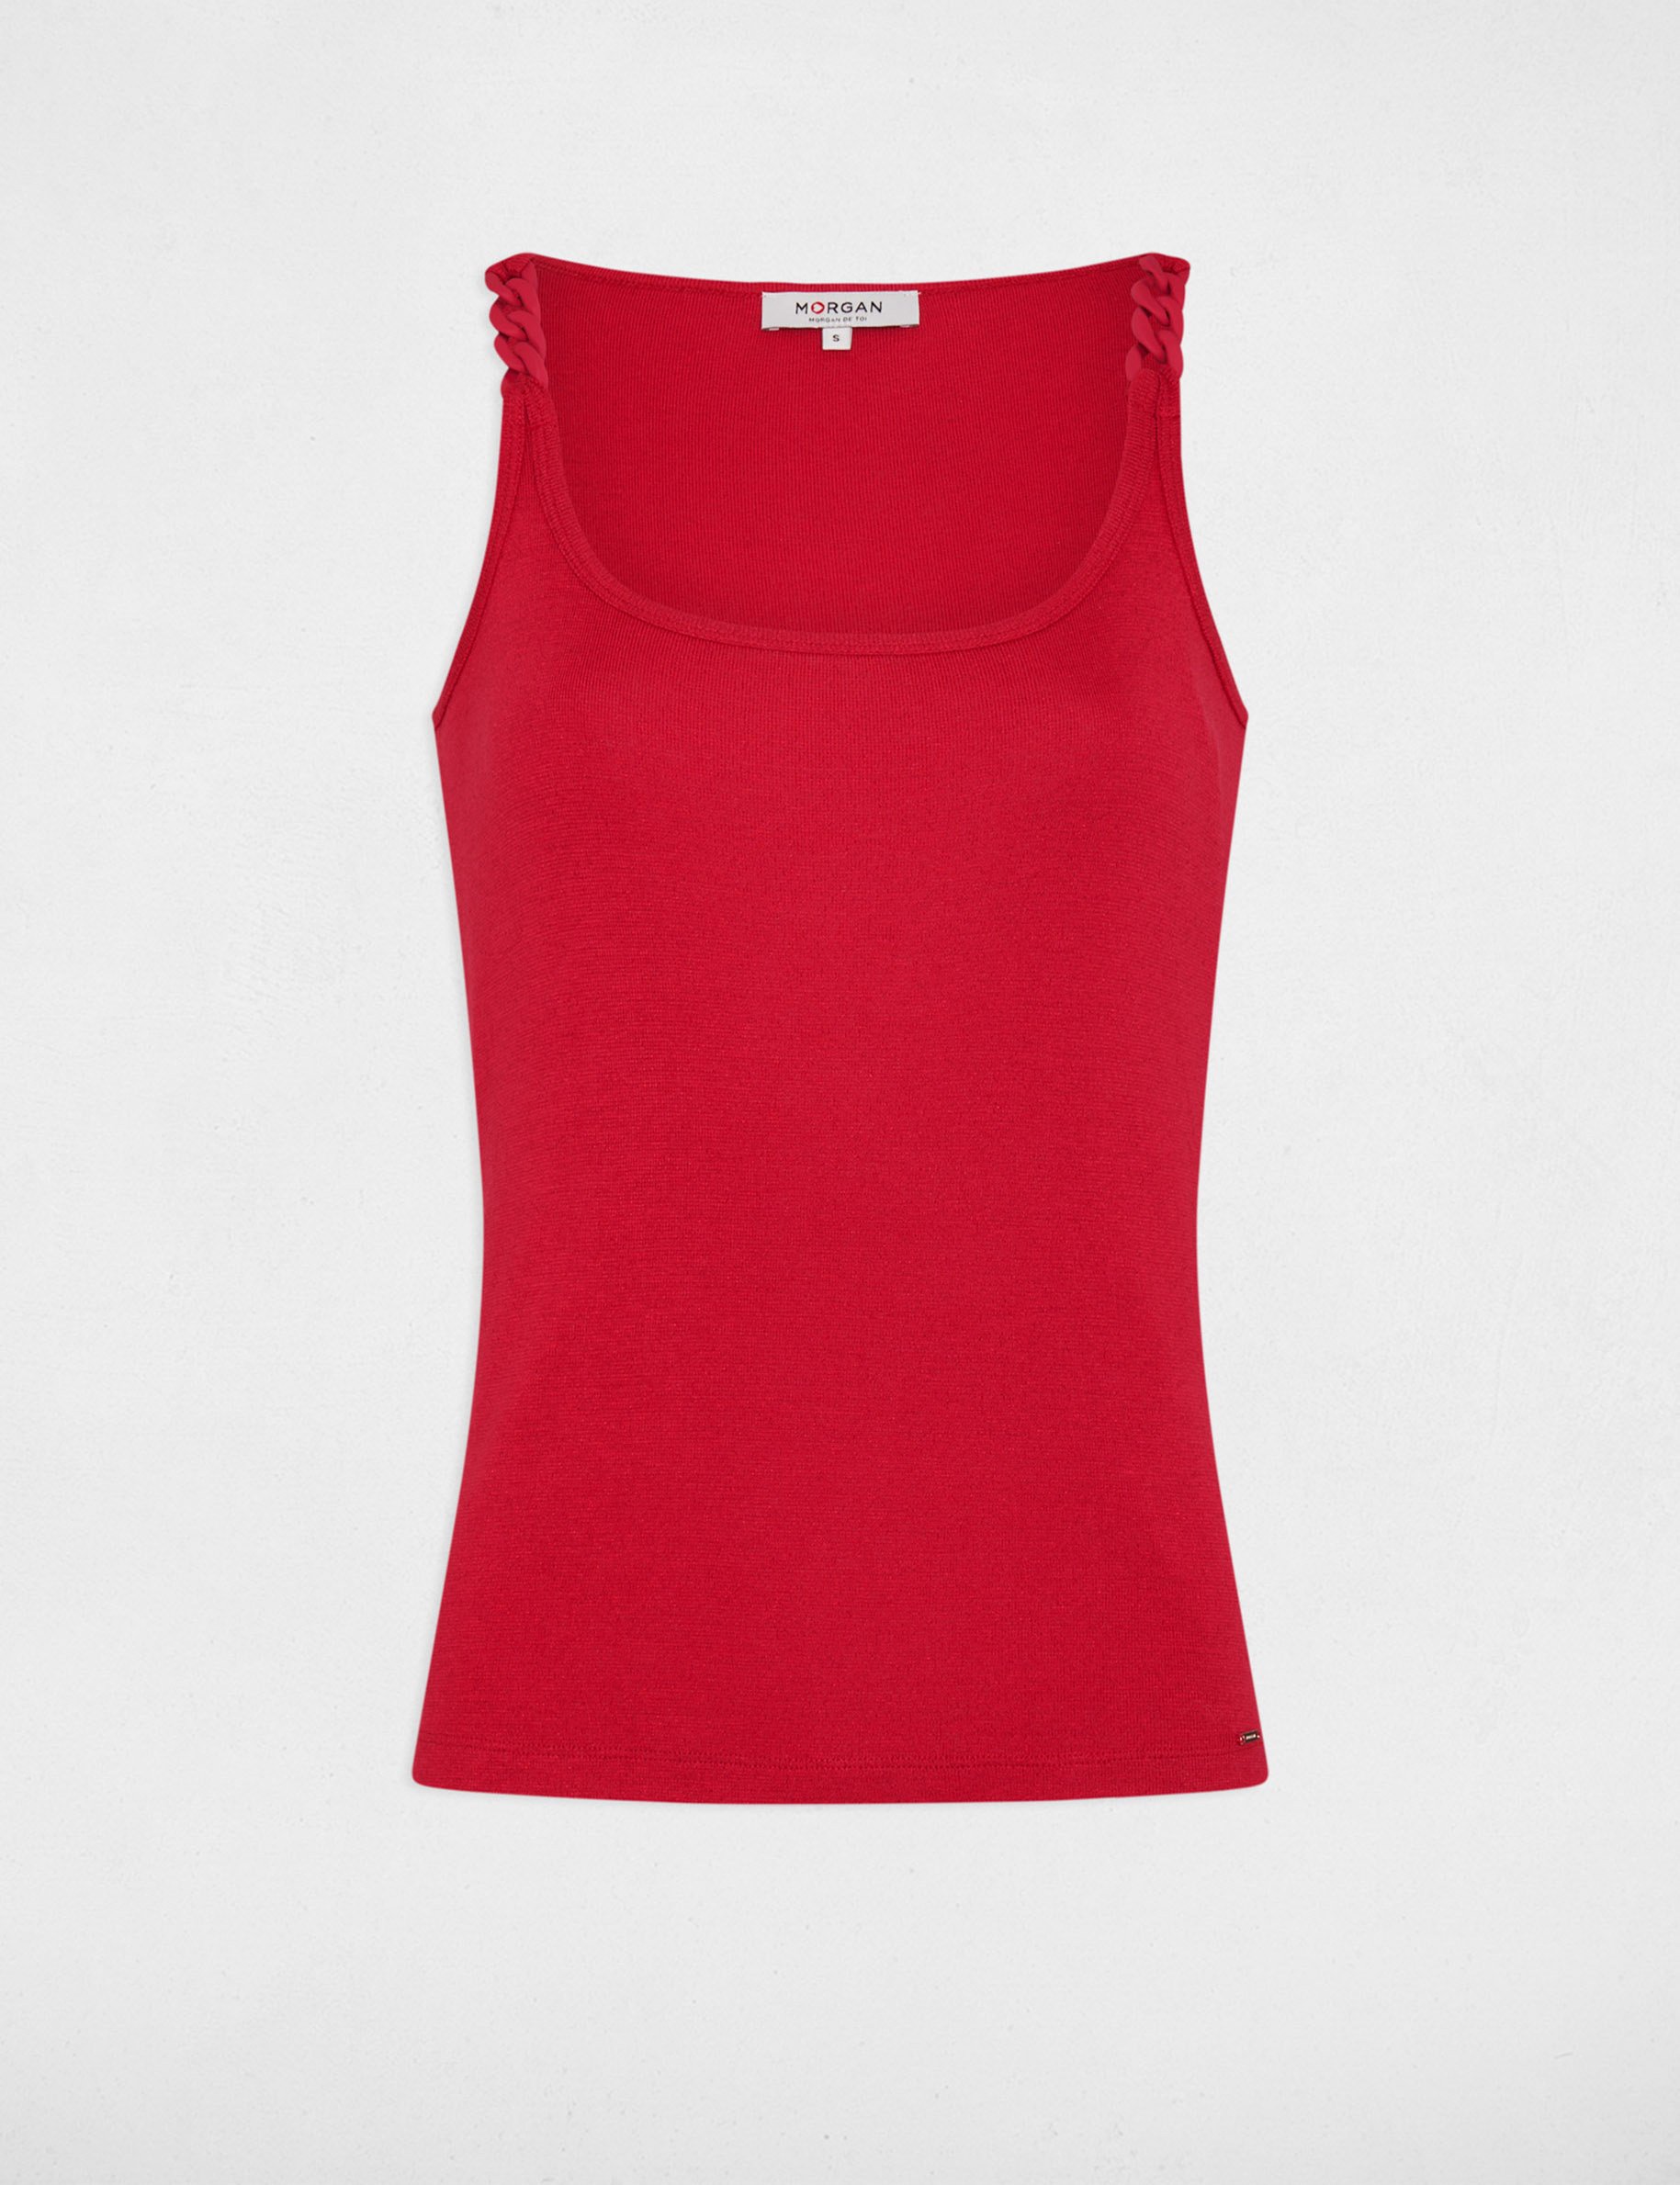 Vest top with thin straps medium red ladies'